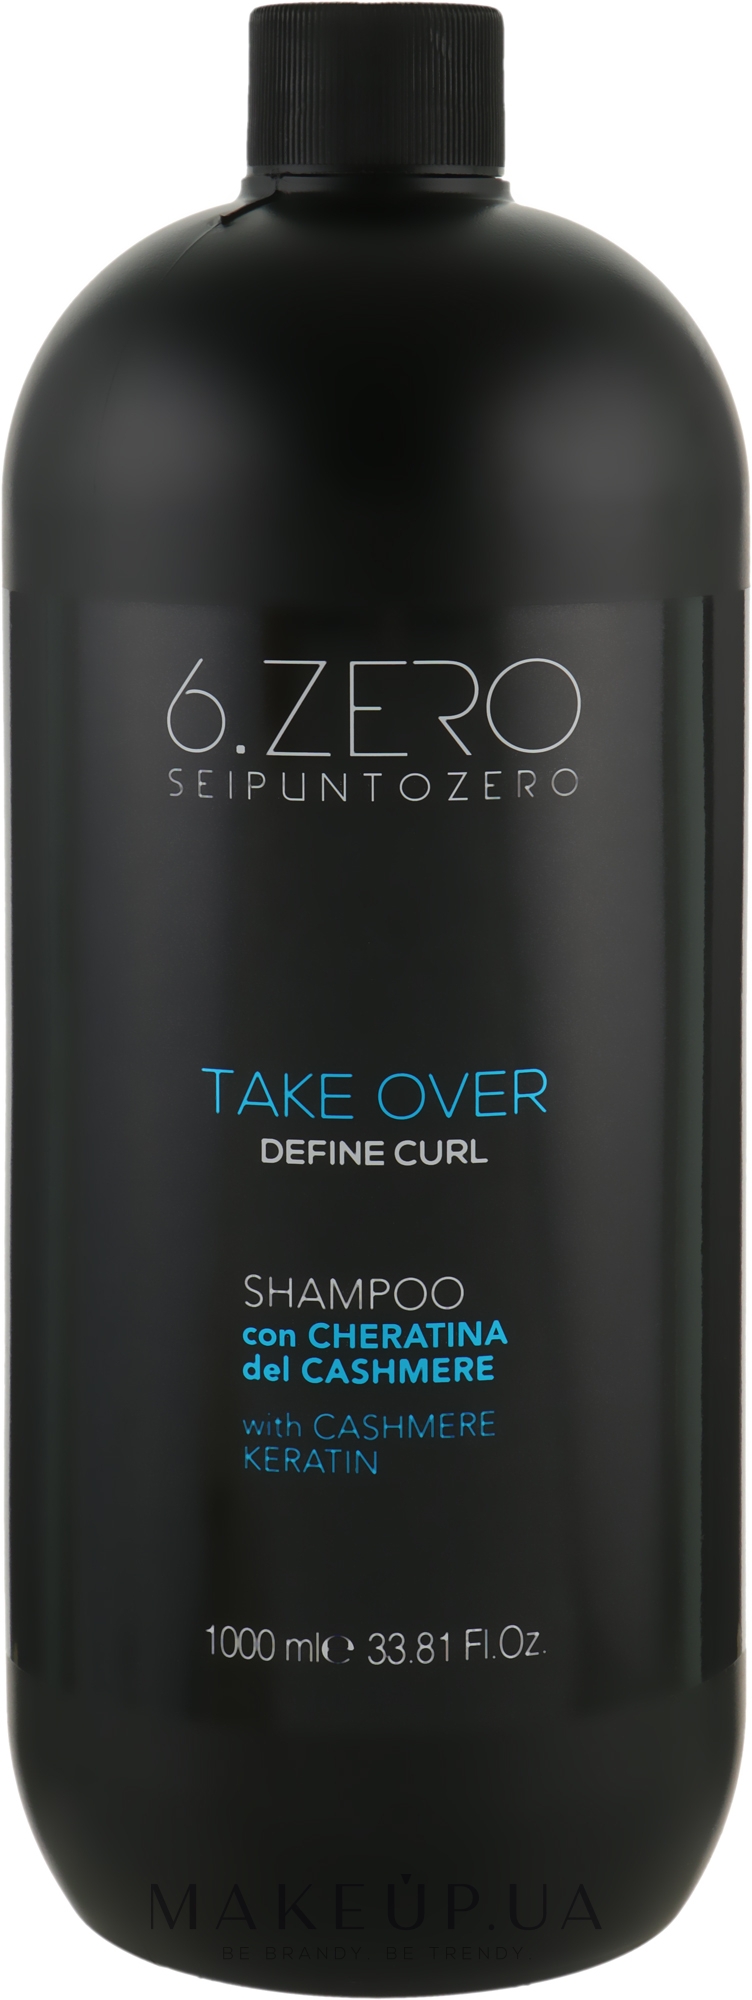 Шампунь для вьющихся волос - Seipuntozero Take Over Define Curl Shampoo — фото 1000ml